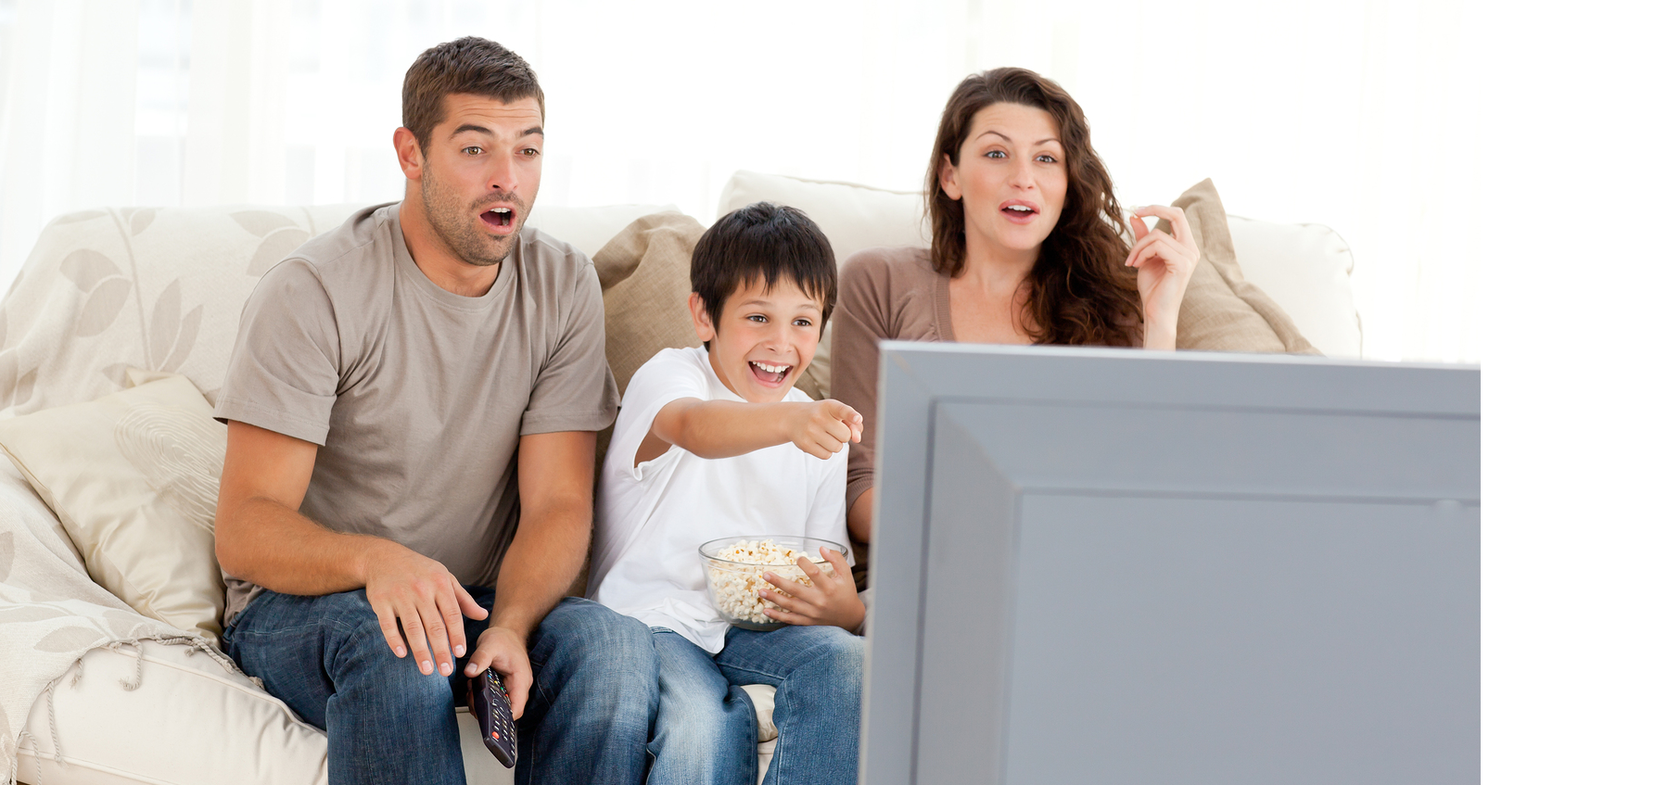 Семья у телевизора. Семья на диване перед телевизором. Семья смотрит телевизор. Счастливая семья у телевизора. Мама друга на диване